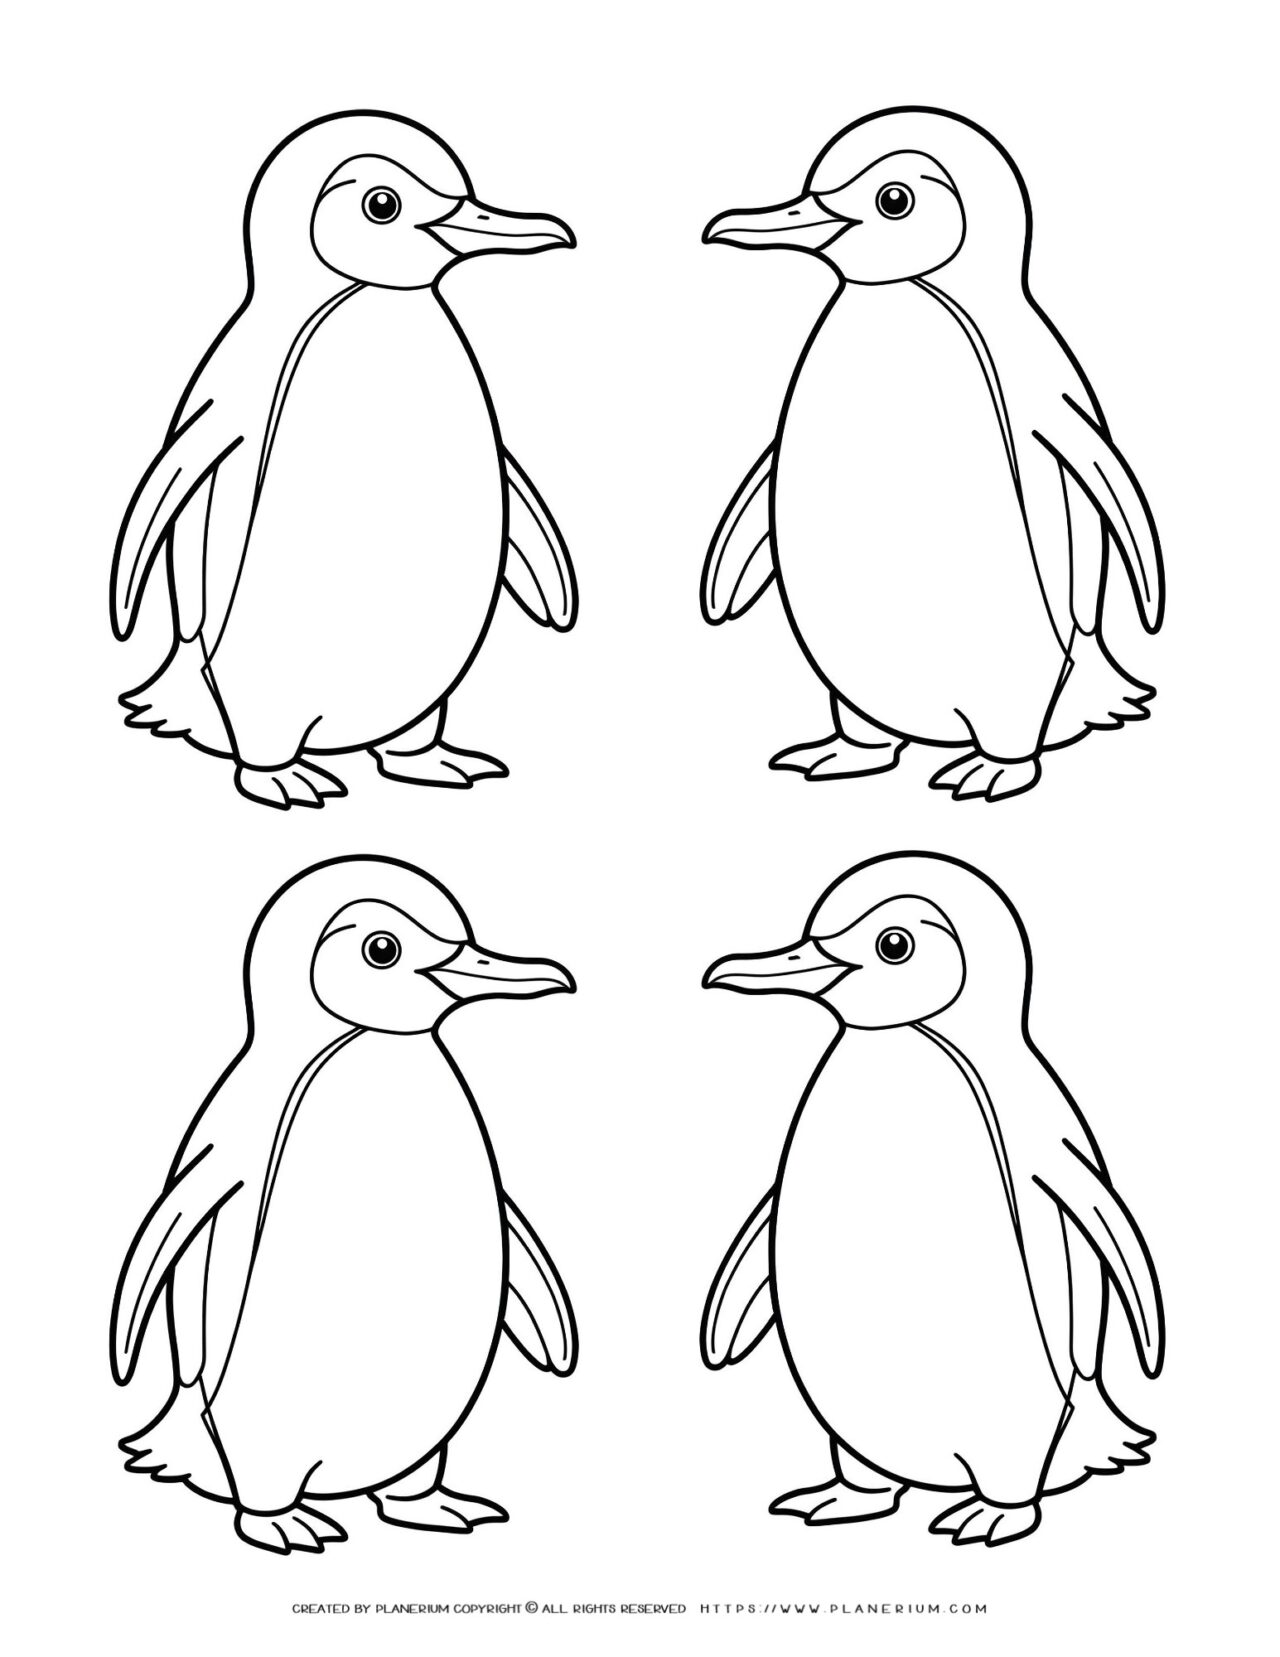 Four-cartoon-penguins-coloring-page